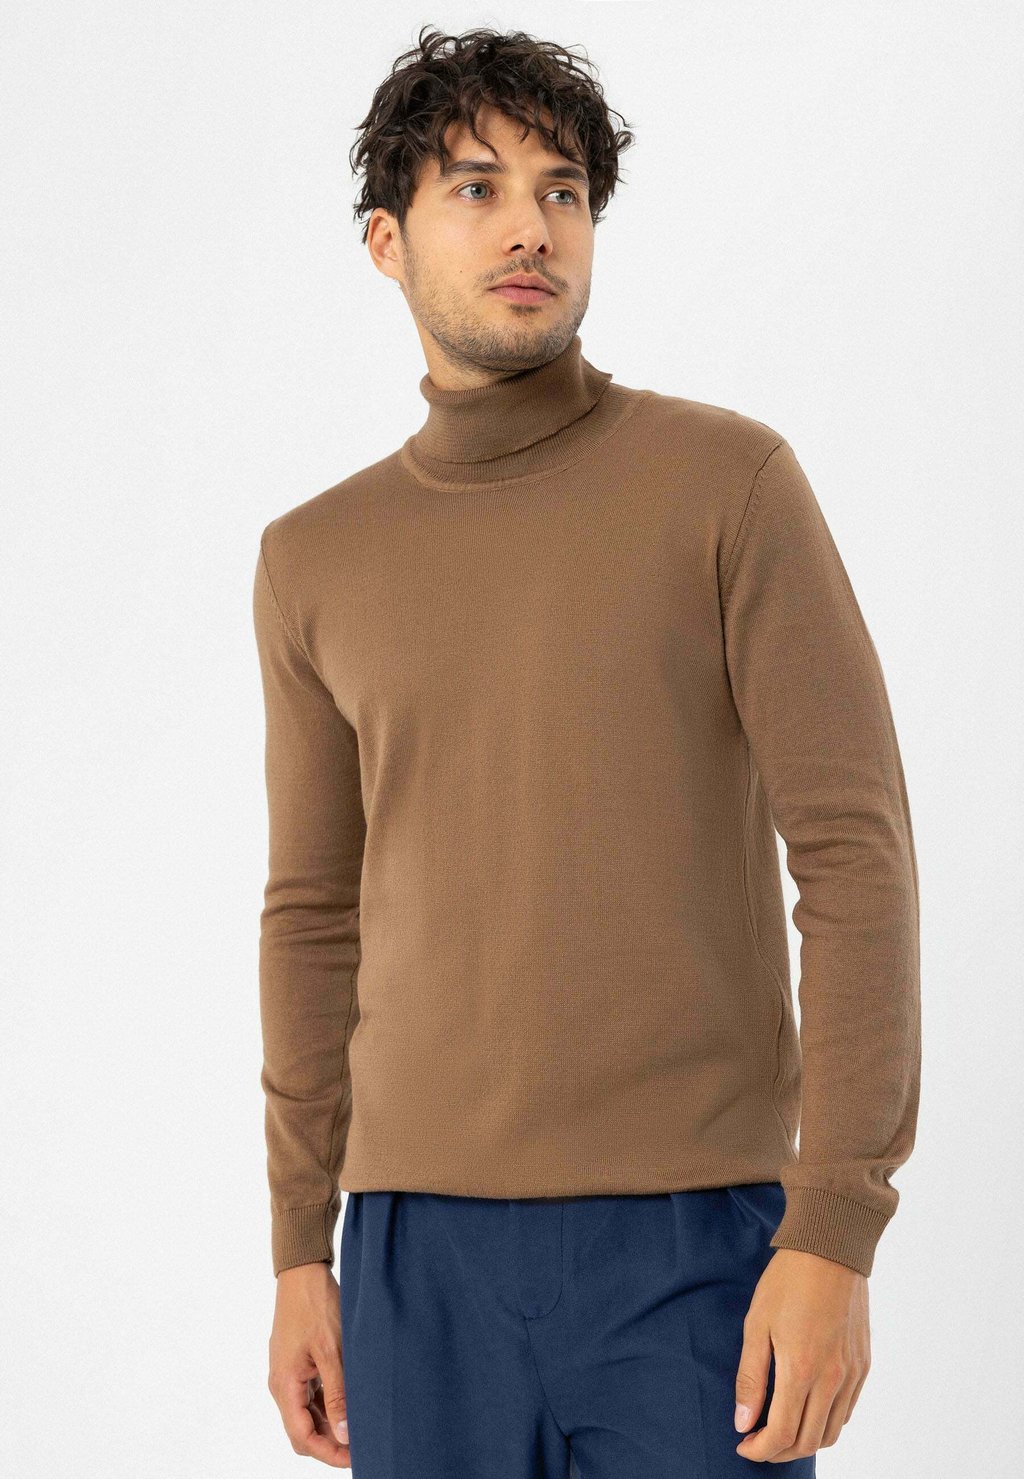 Свитер Blend Roll Neck dandalo, коричневый свитер blend roll neck dandalo цвет burgundy